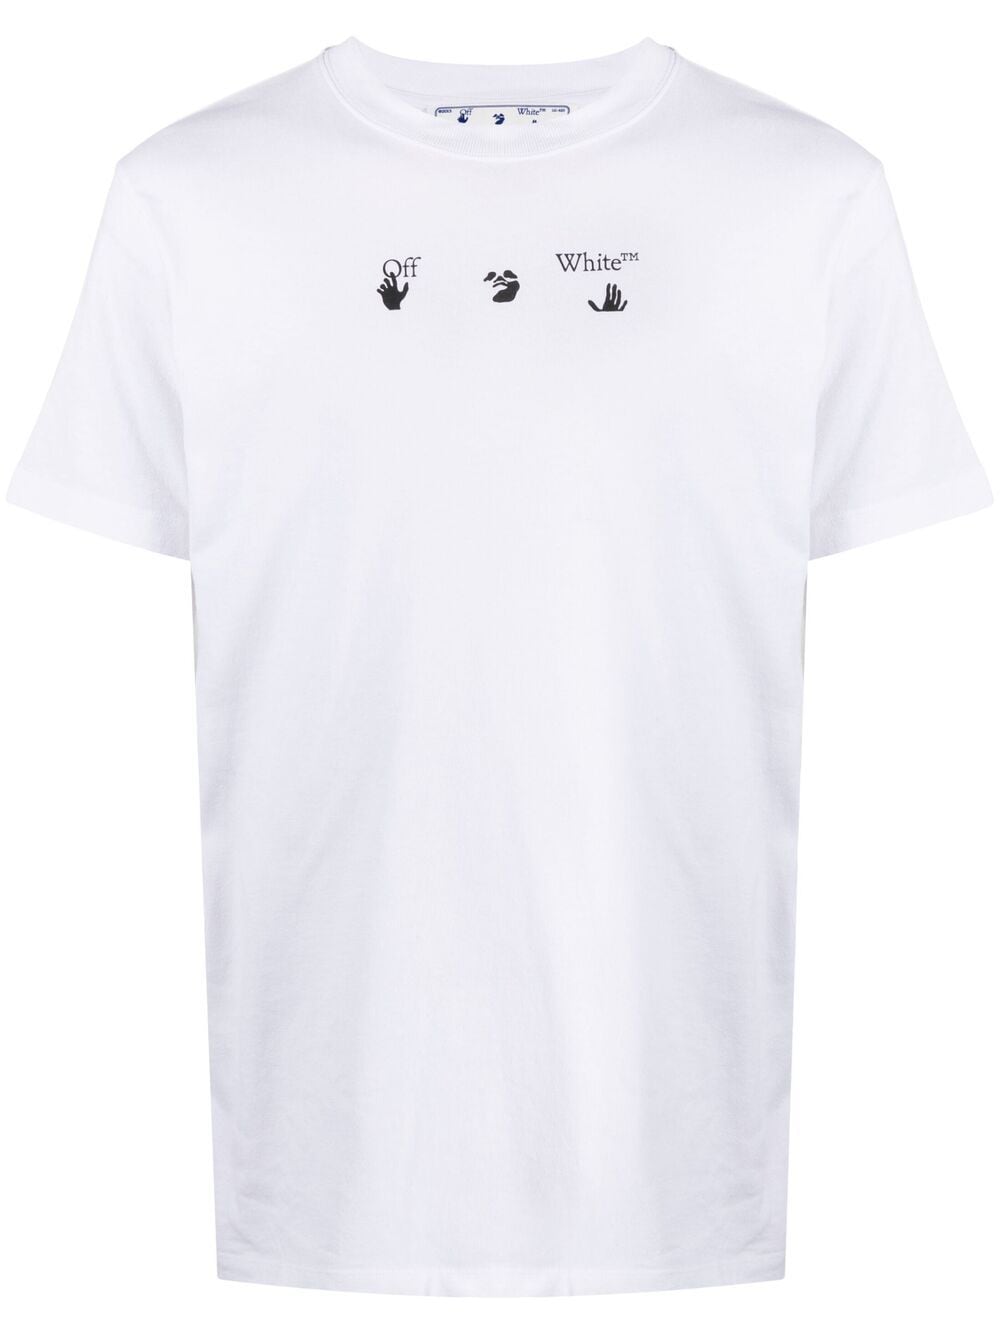 OFF-WHITE Marker Arrow T-shirt White/Multicolor